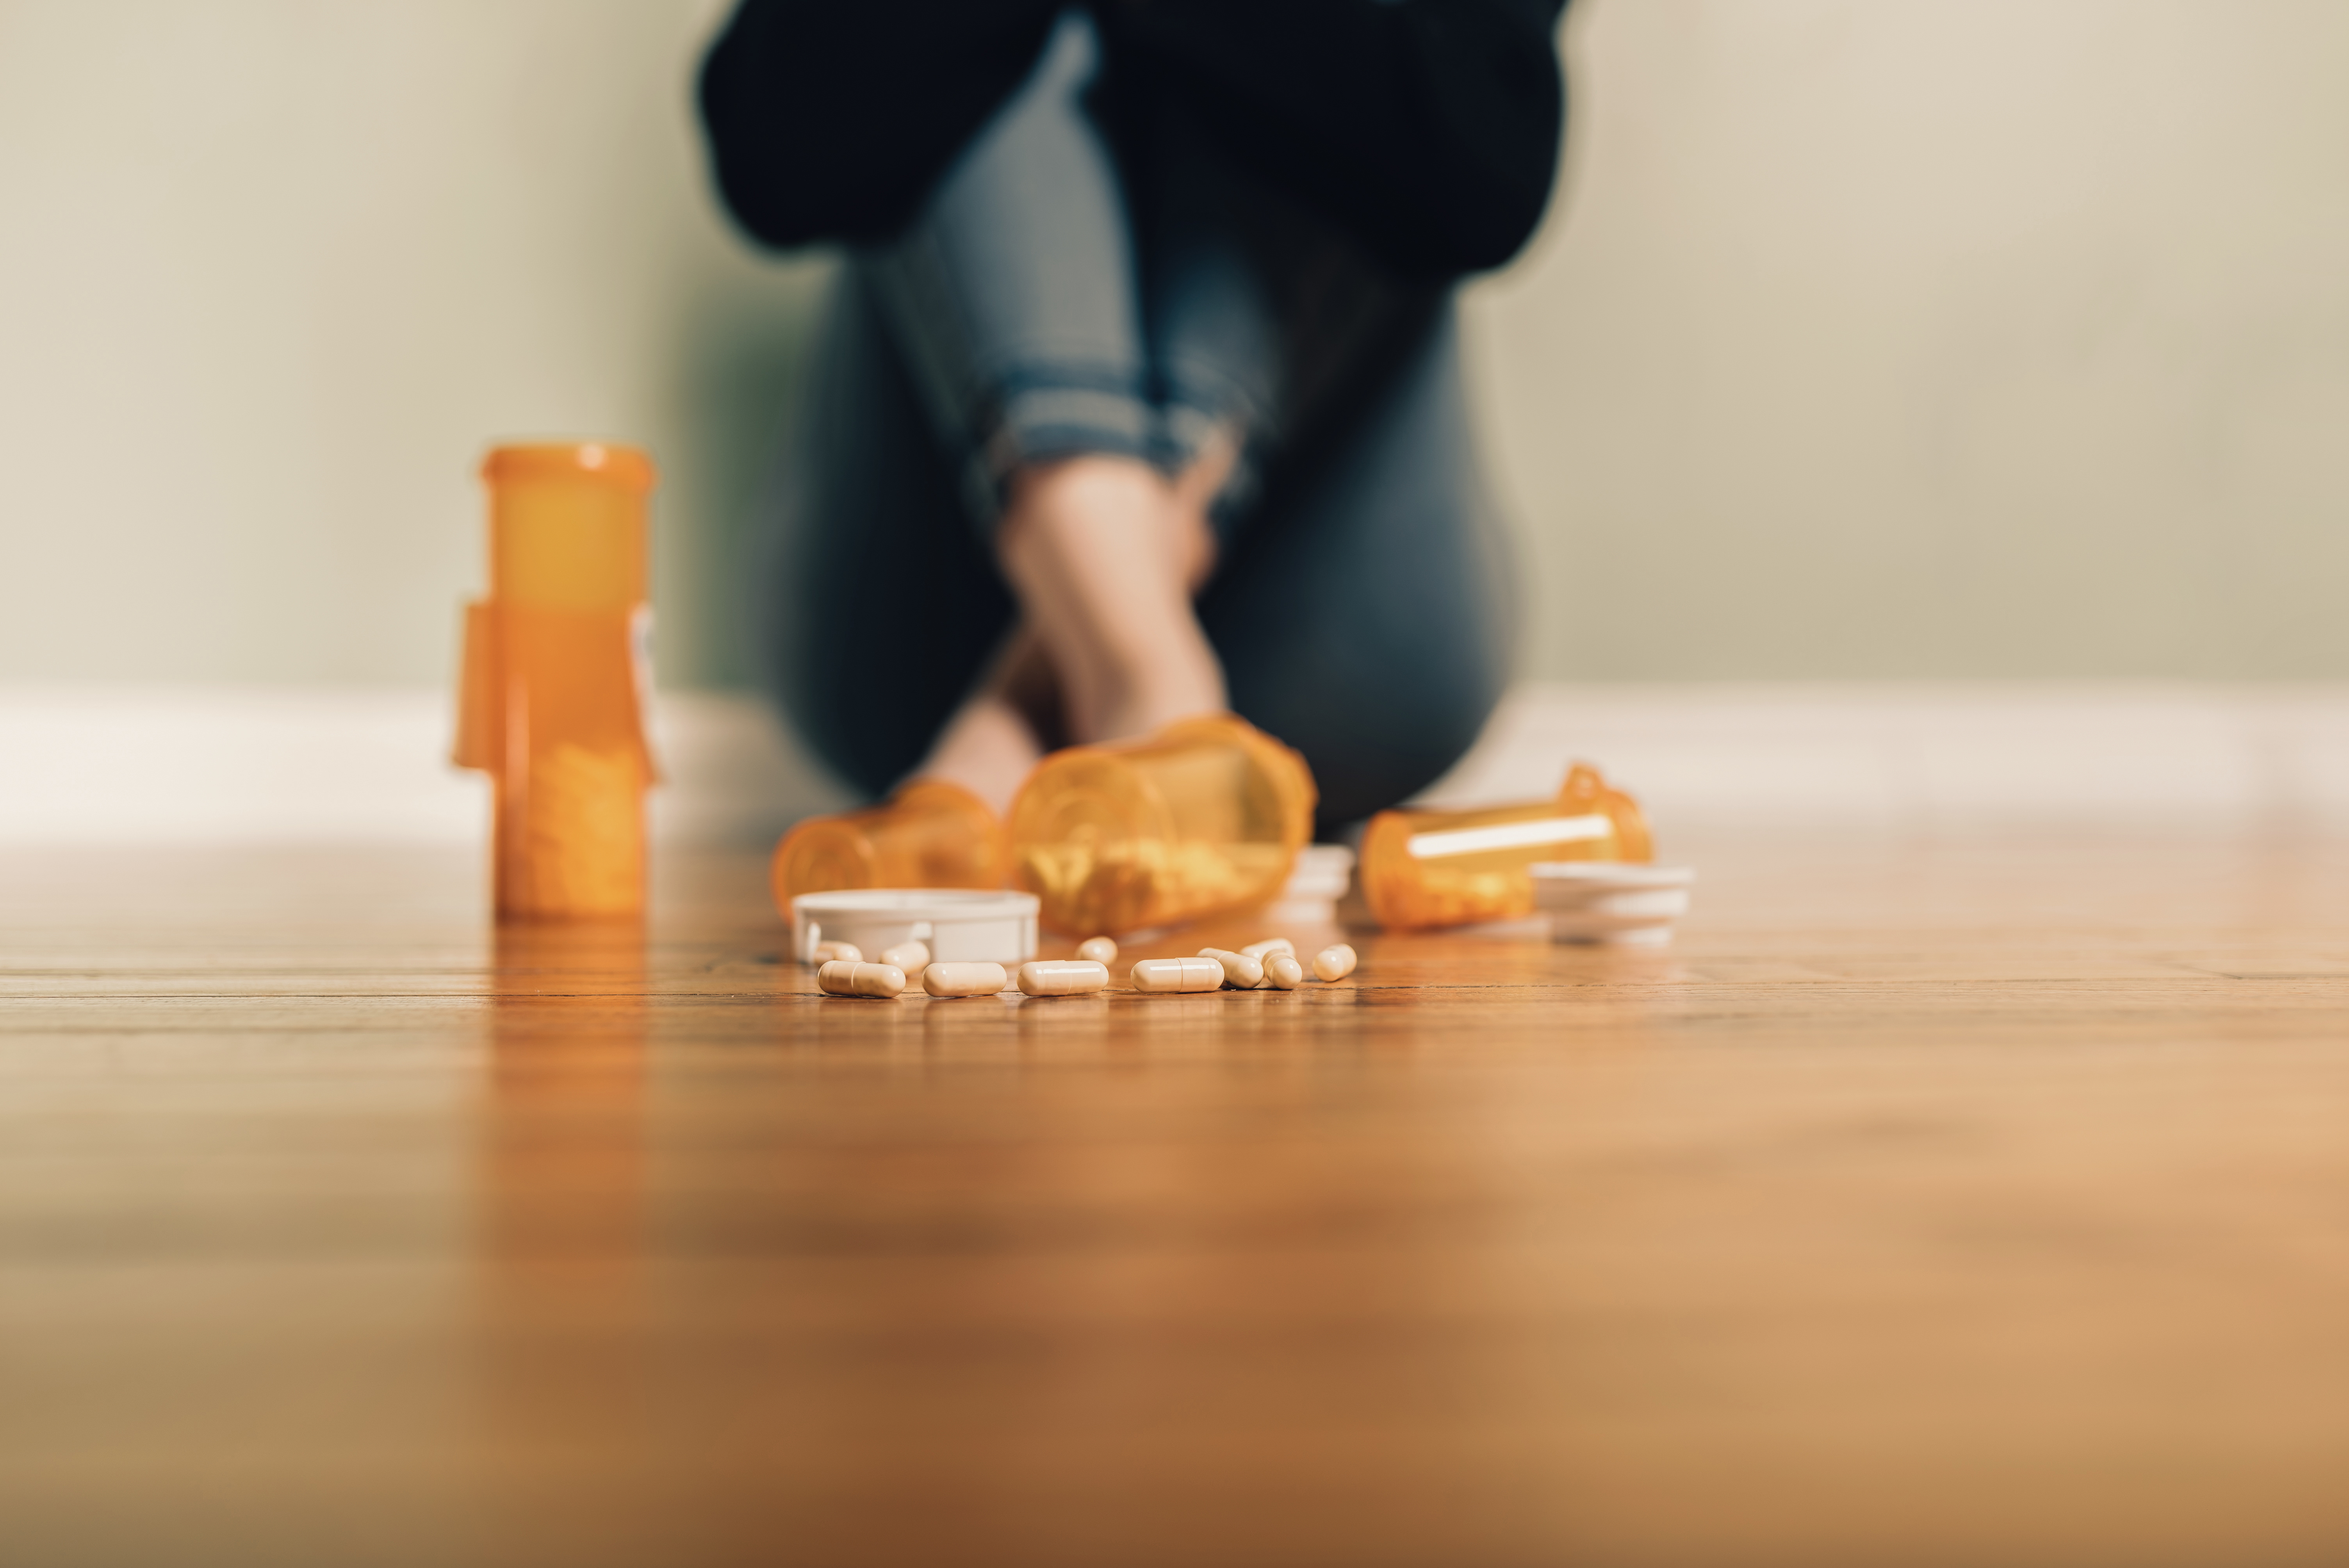 Opiates Depression Treatment: Symptoms & What's Next in Life?